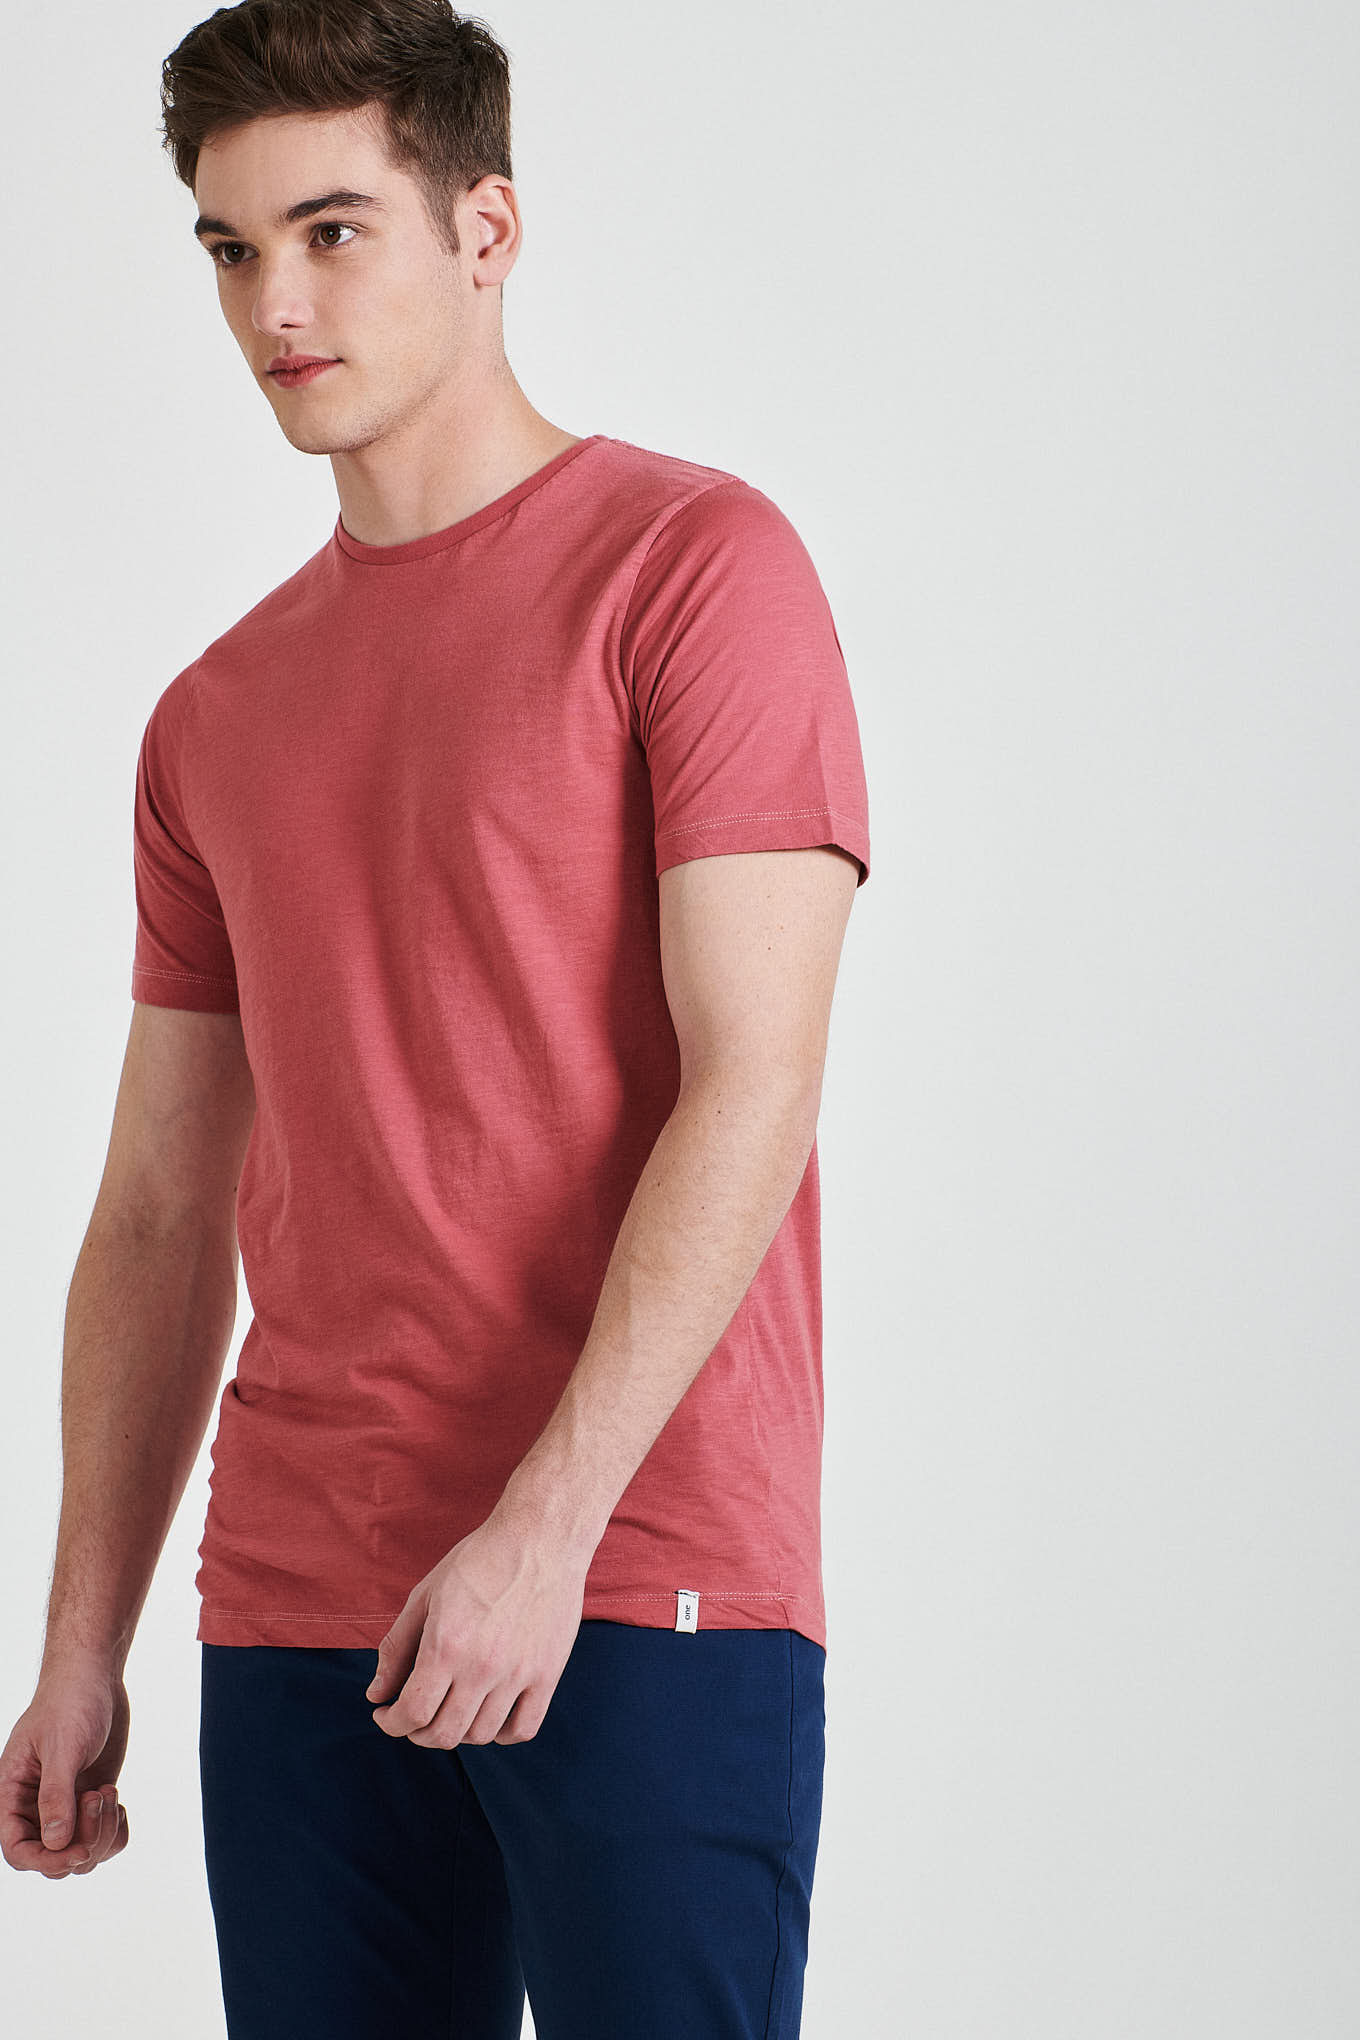 T-Shirt Pale Pink Casual Man